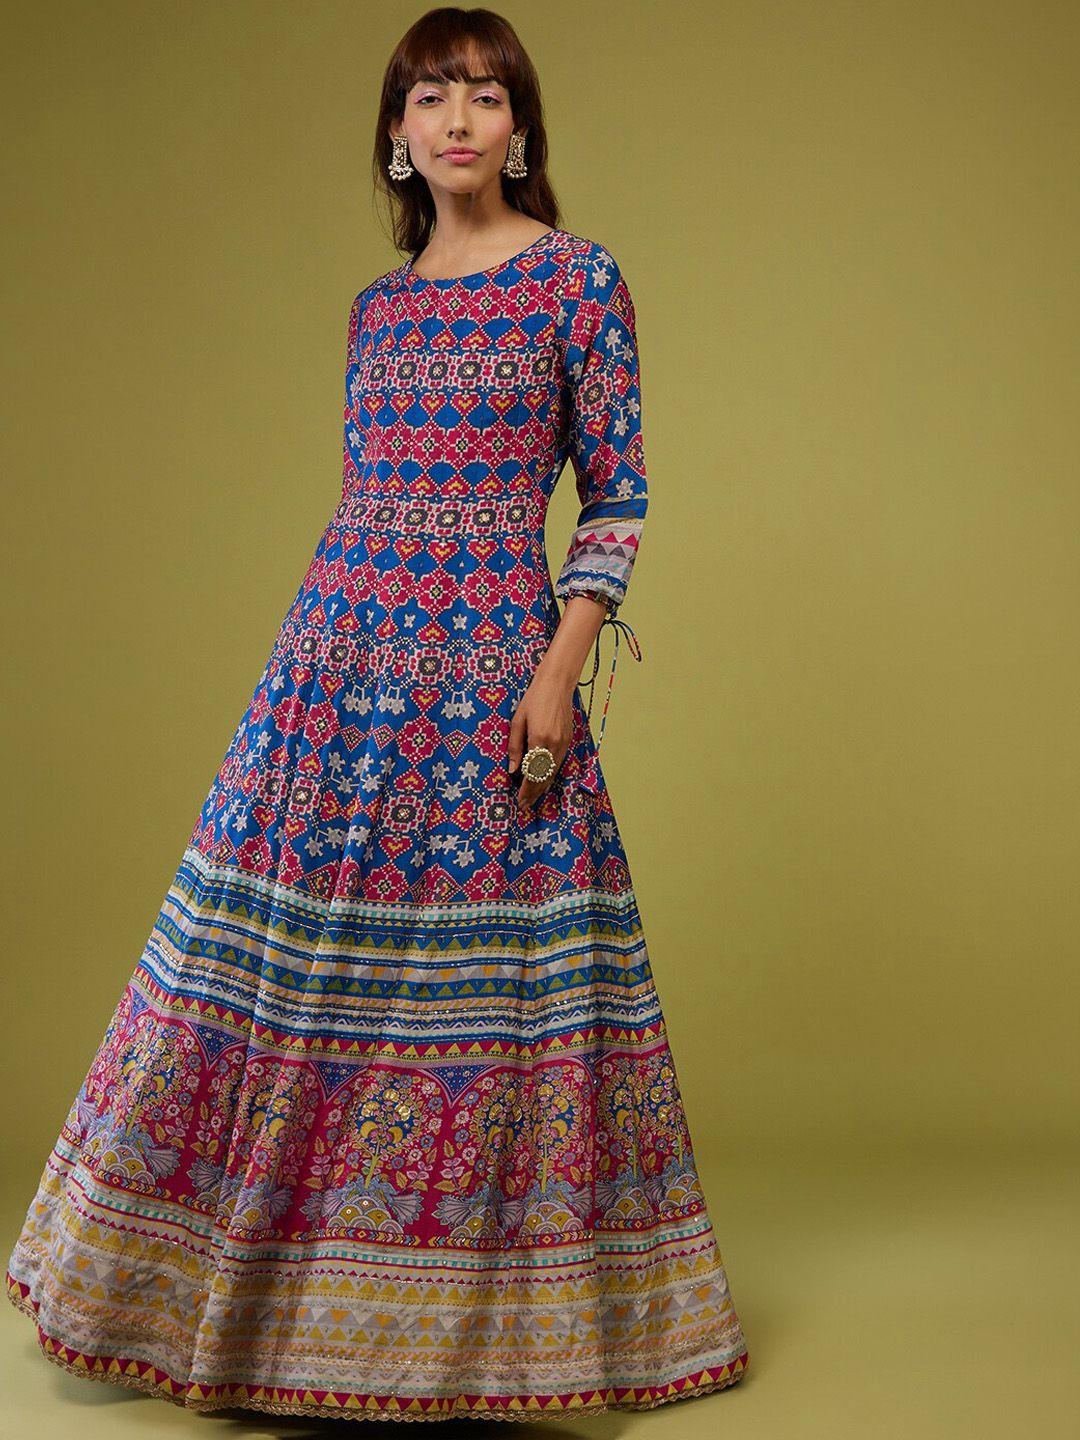 kalki fashion ethnic motifs printed ethnic dress